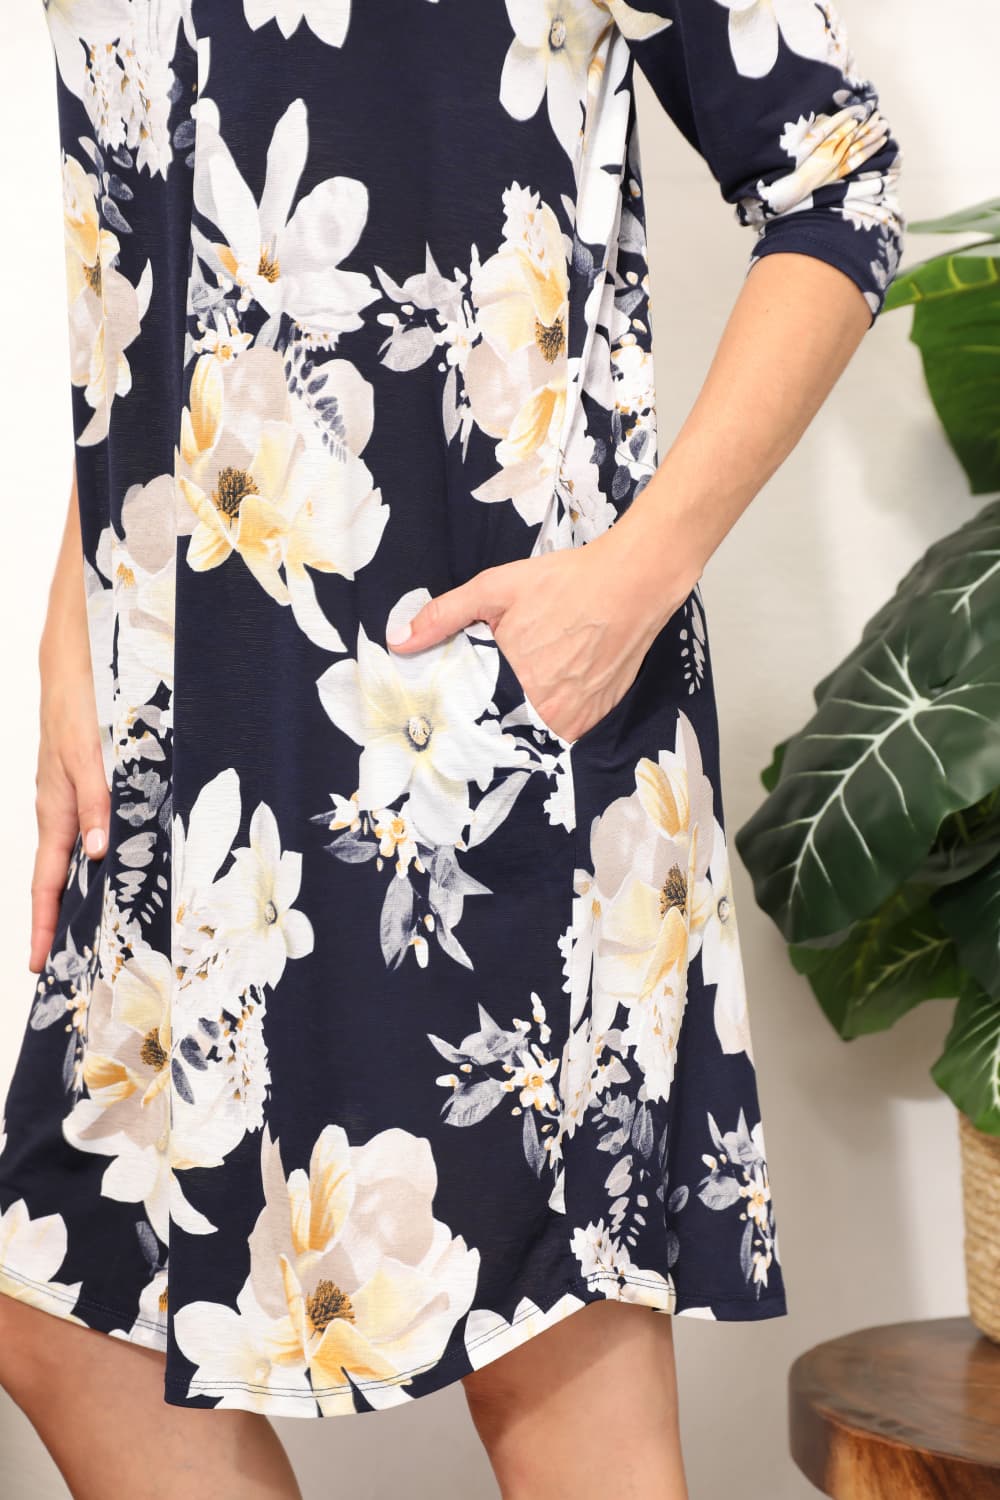 Sew In Love  Full Size Flower Print Shirt Dress  | KIKI COUTURE